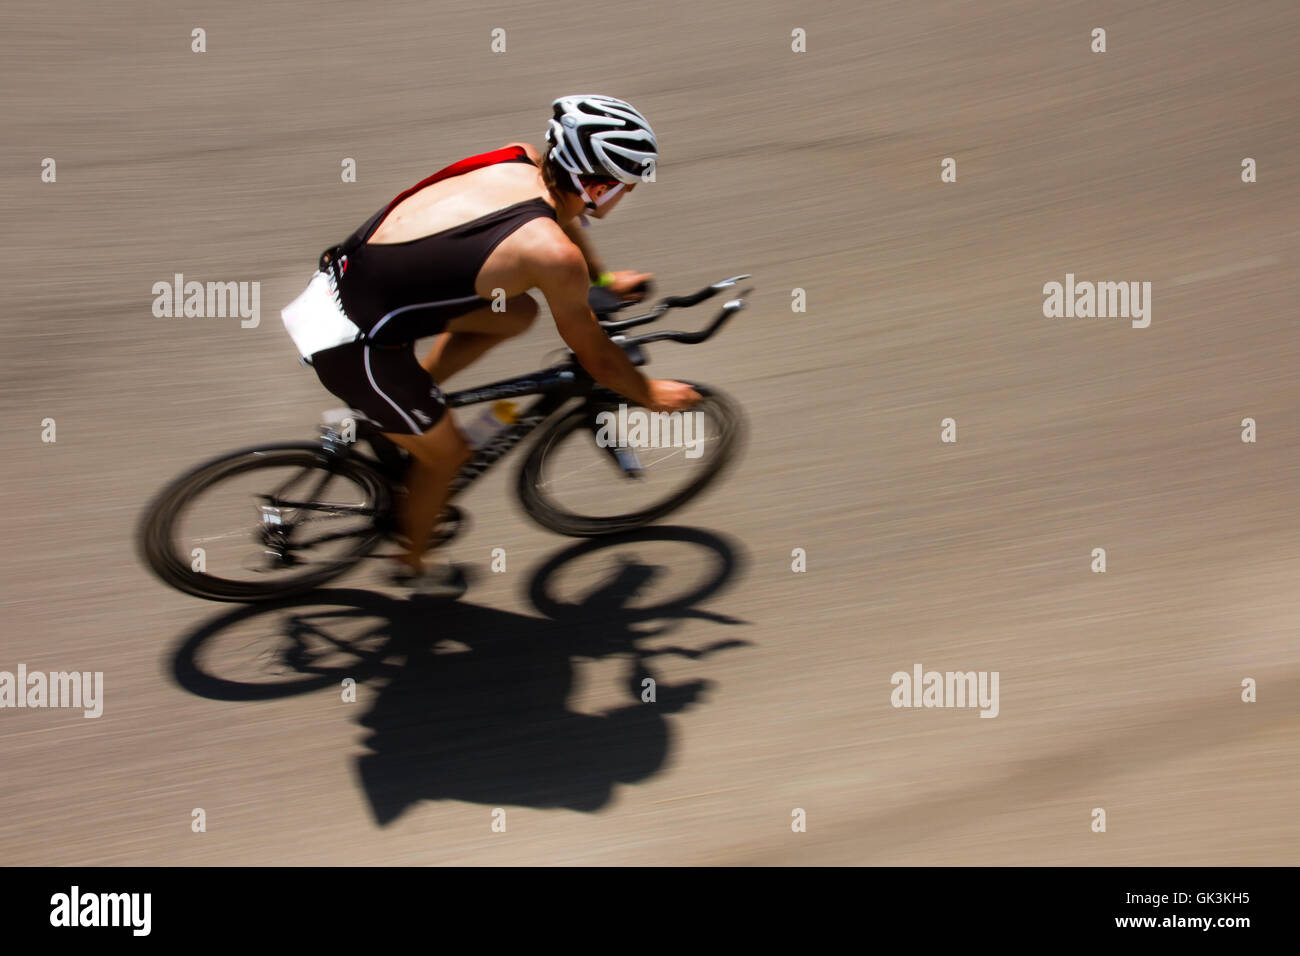 tritahlet cycling Stock Photo